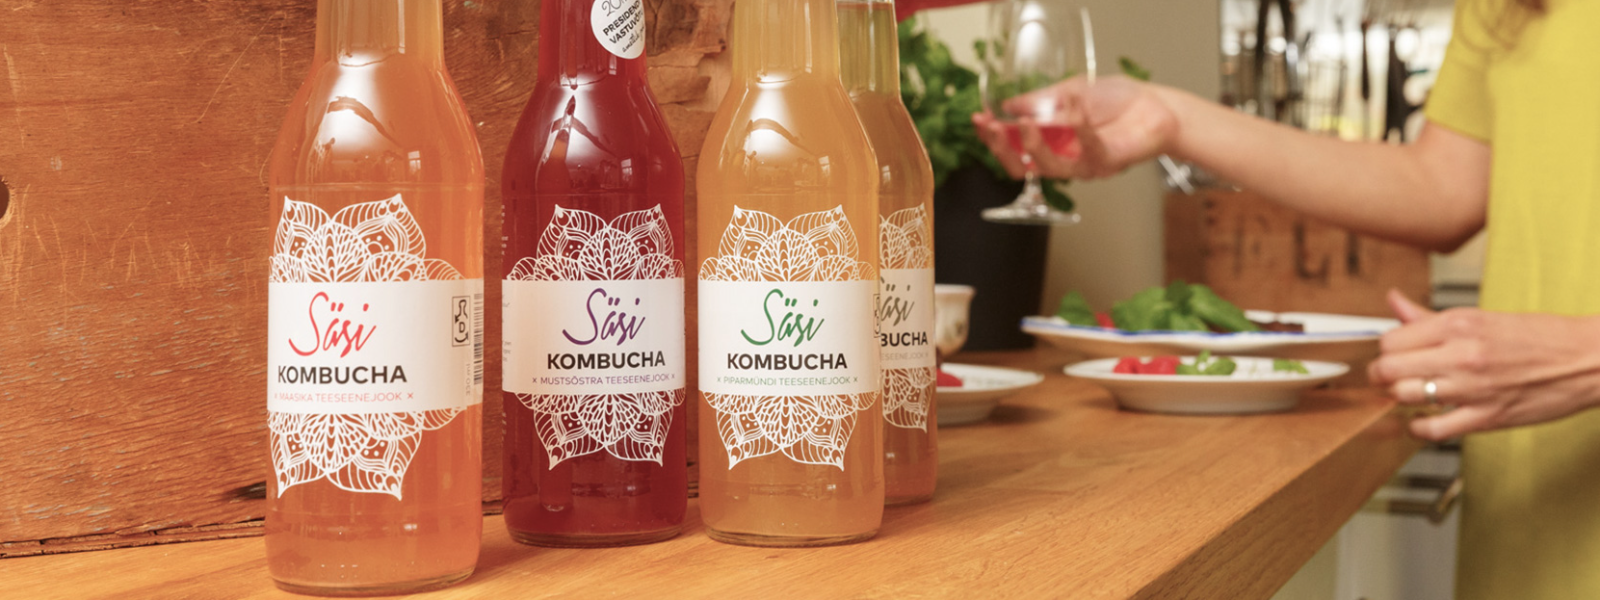 SÄSI PRUULIKODA OÜ - kombucha, Handmade beverages, Water Keefir, healthy products, Unpasteurised production, tea mushroo...